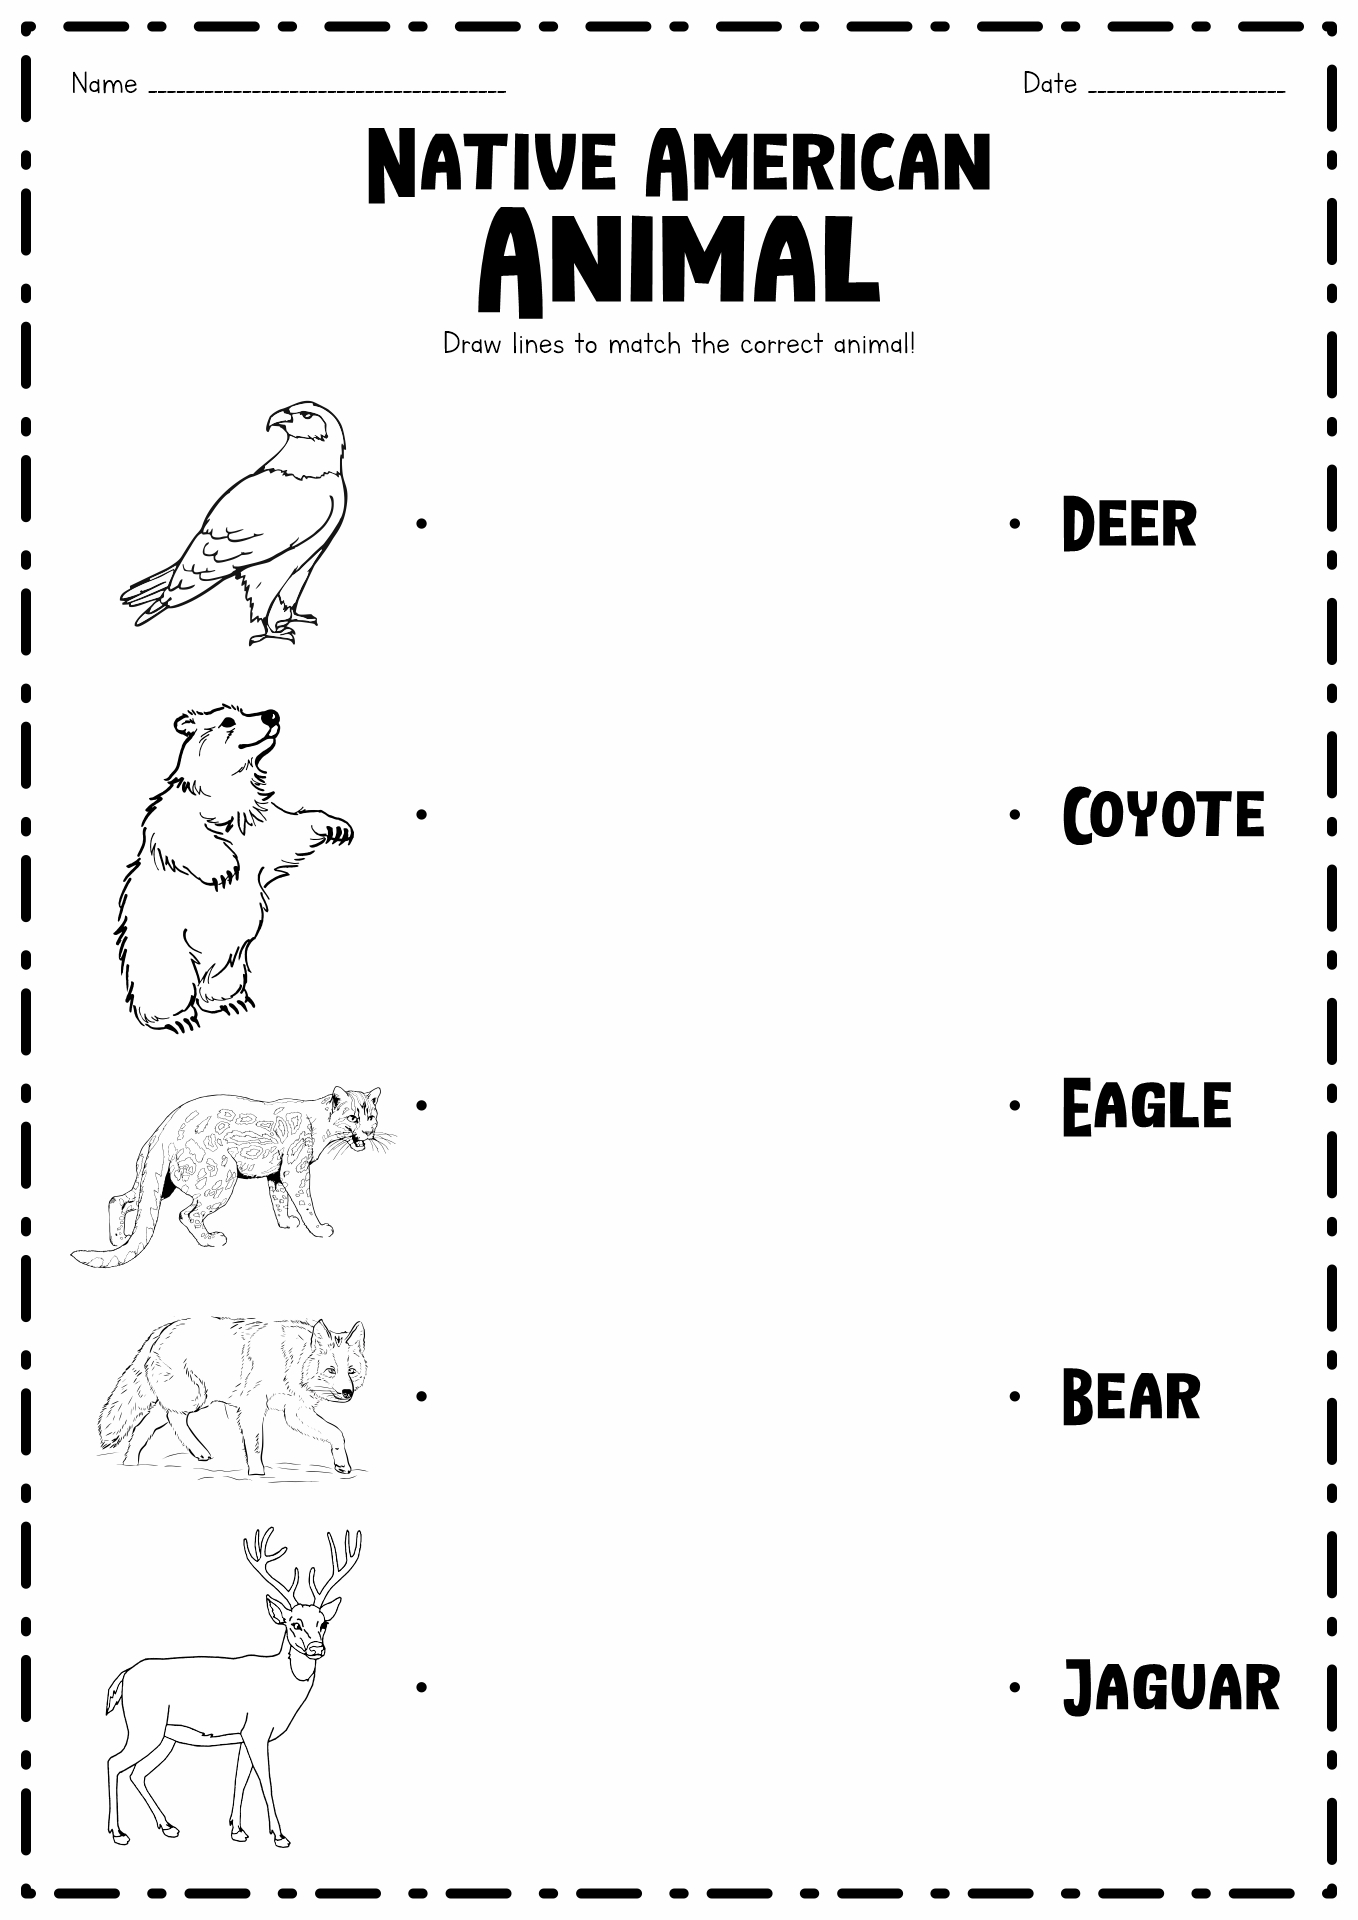 Native American Animal Worksheet Image